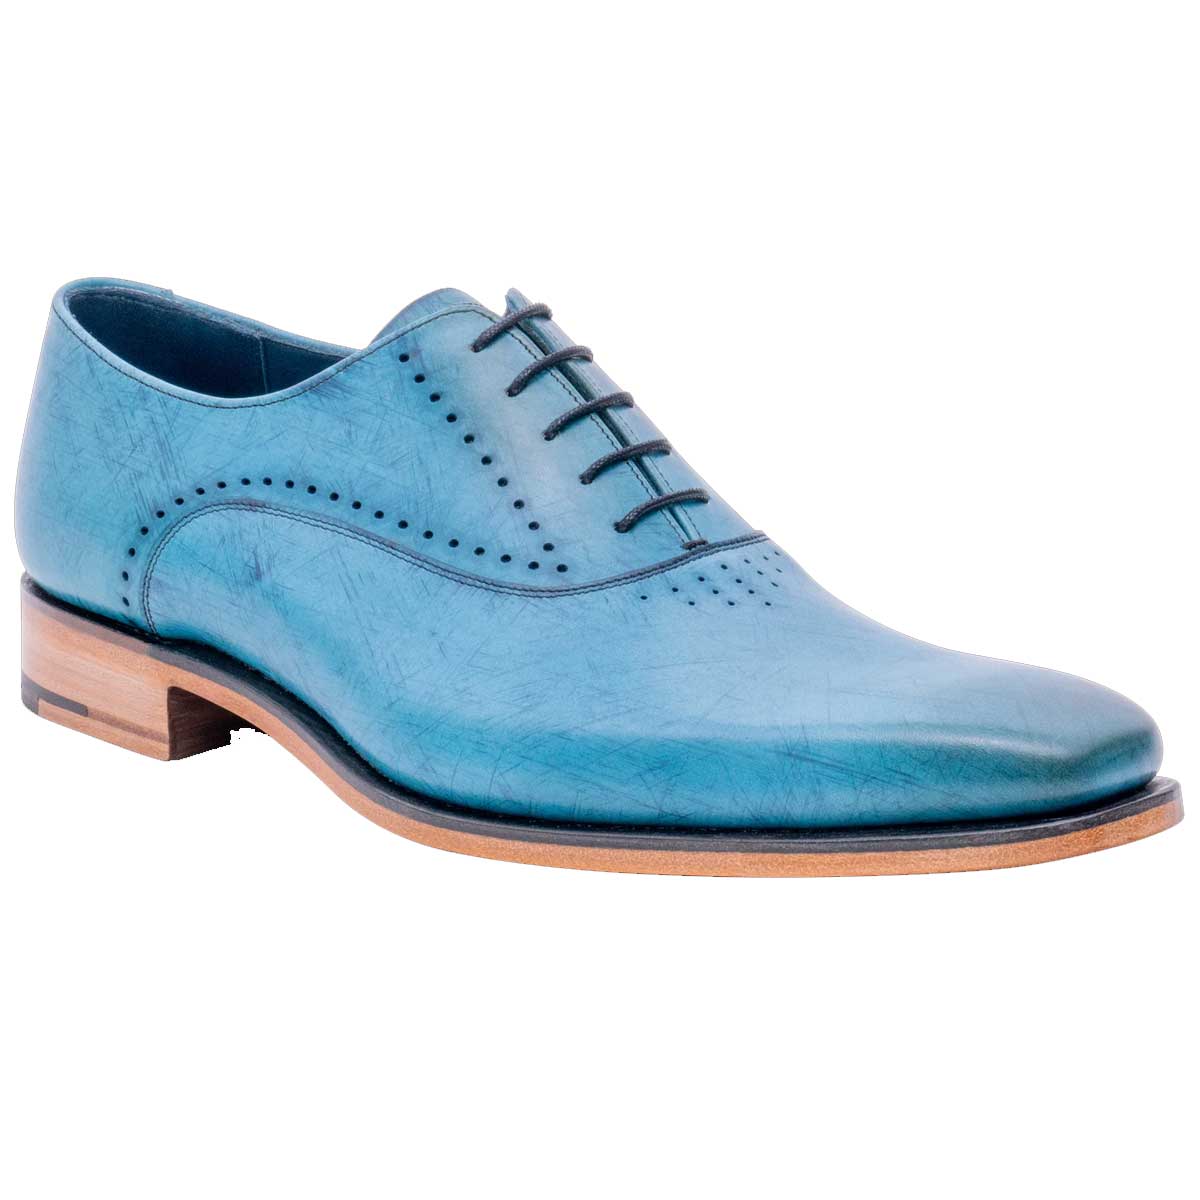 BARKER Witney Shoes - Mens - Blue Calf Hatch Effect